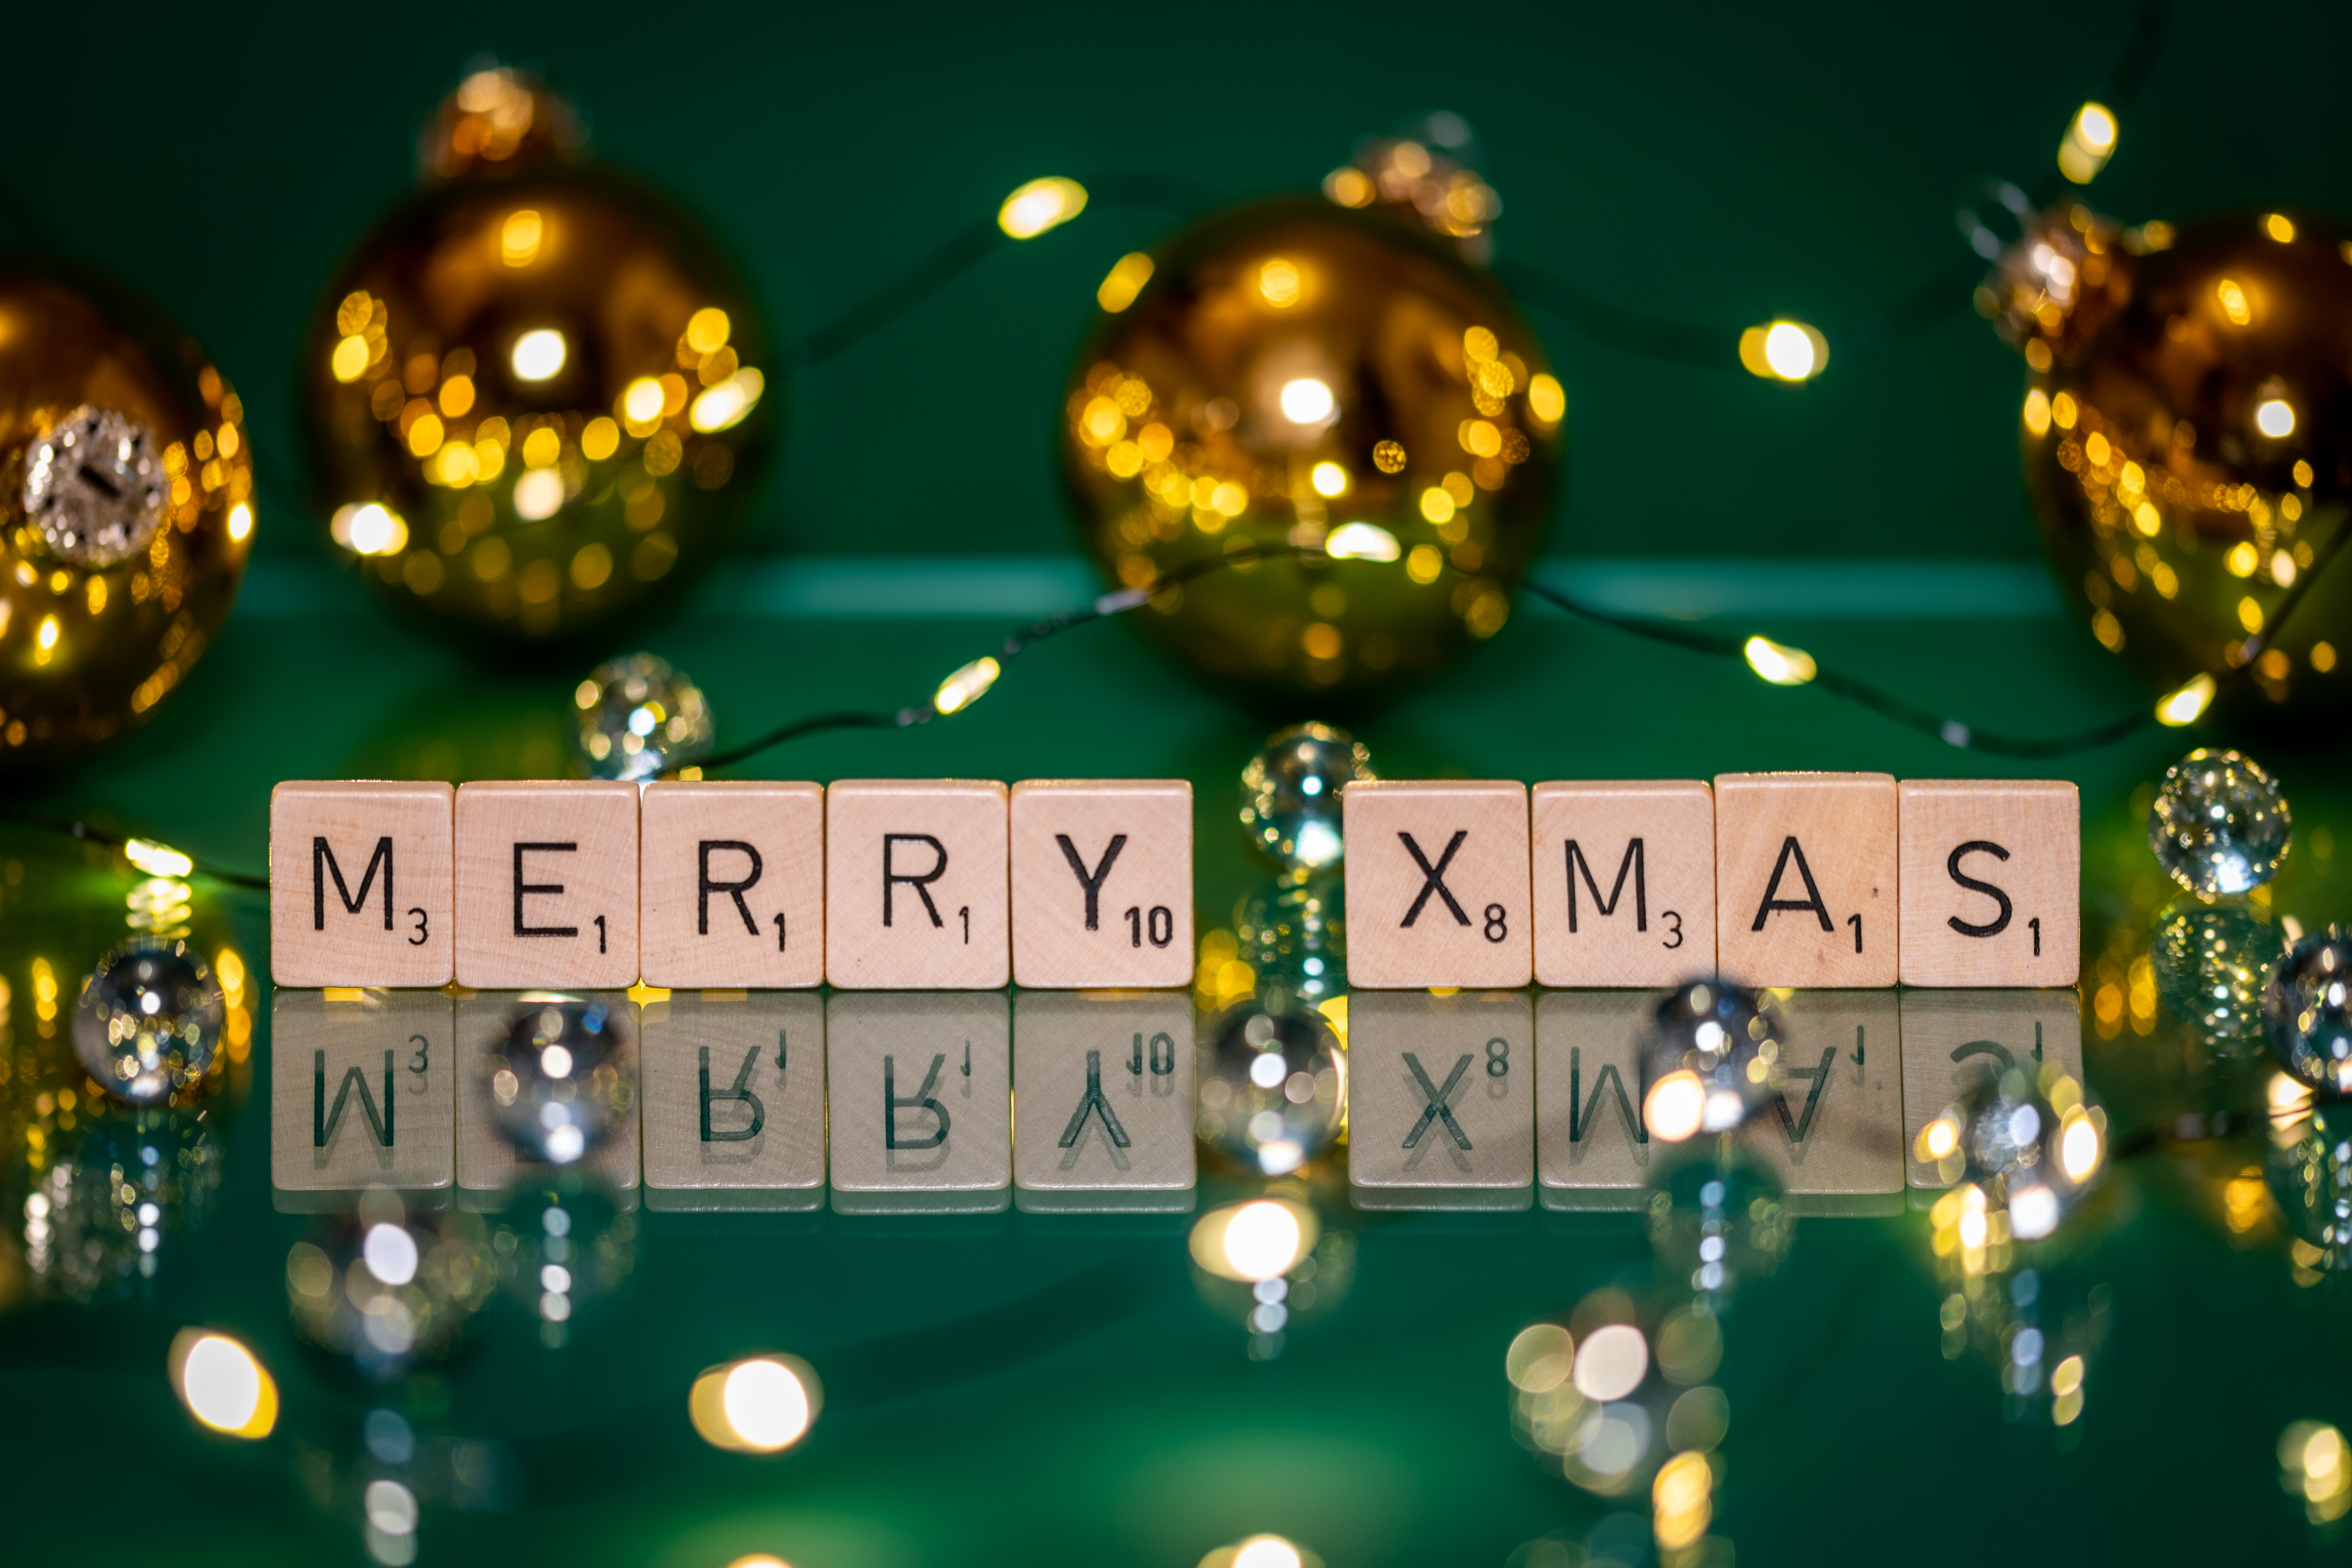 Keywords: Navidad